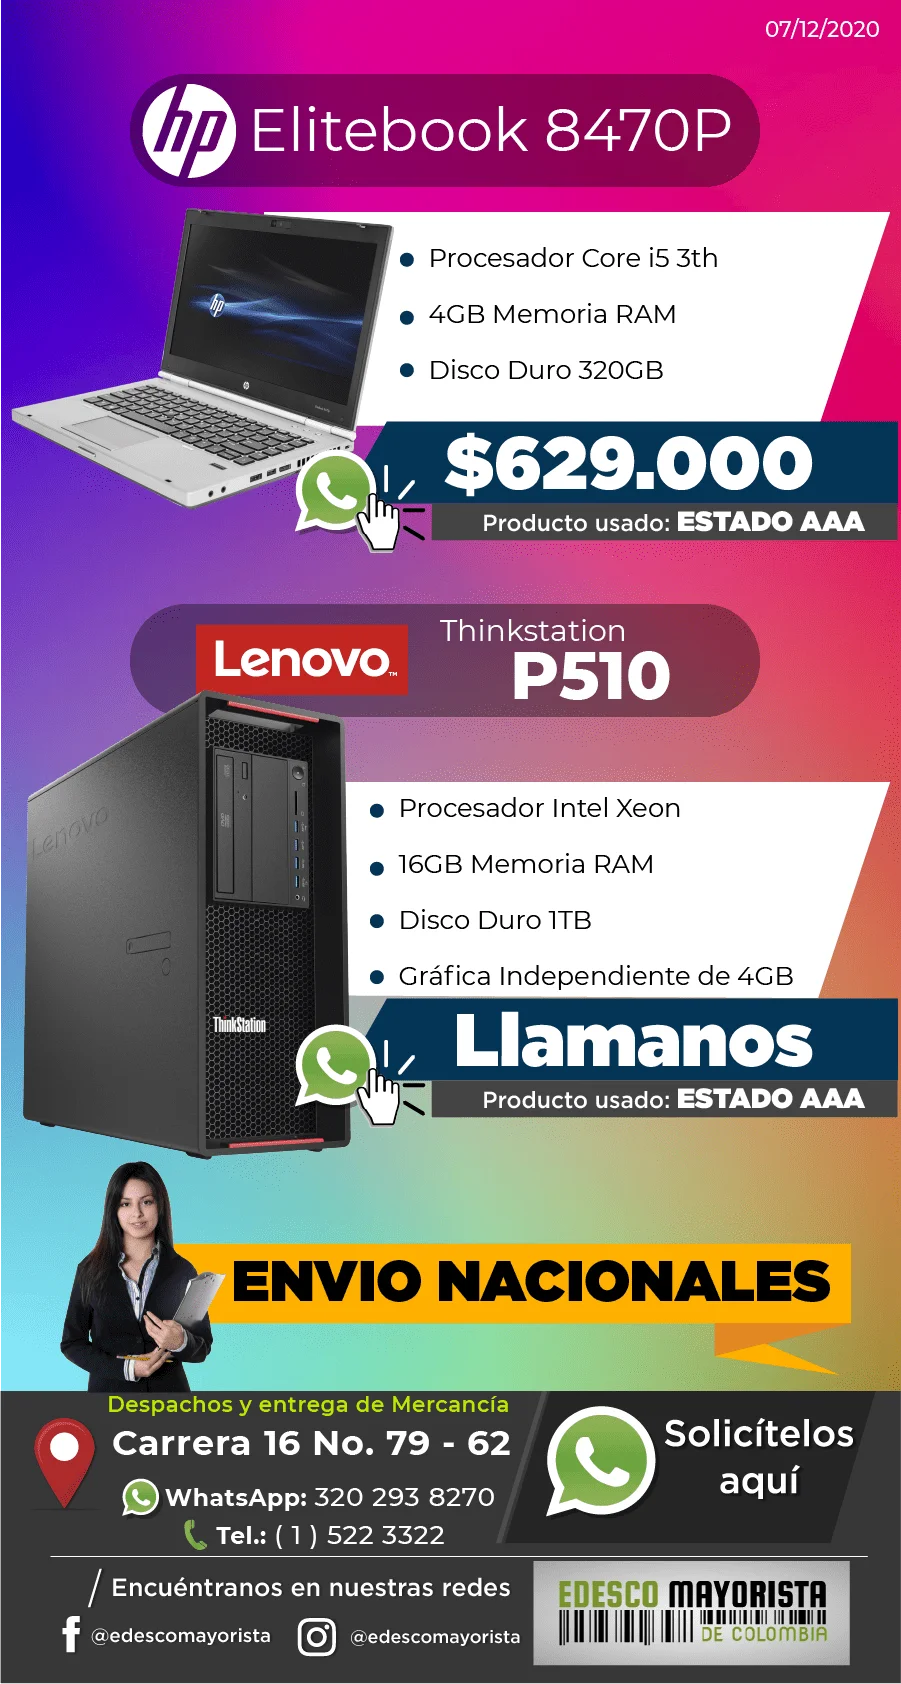 HP EliteBook 8470 - Lenovo Thinkstations P510